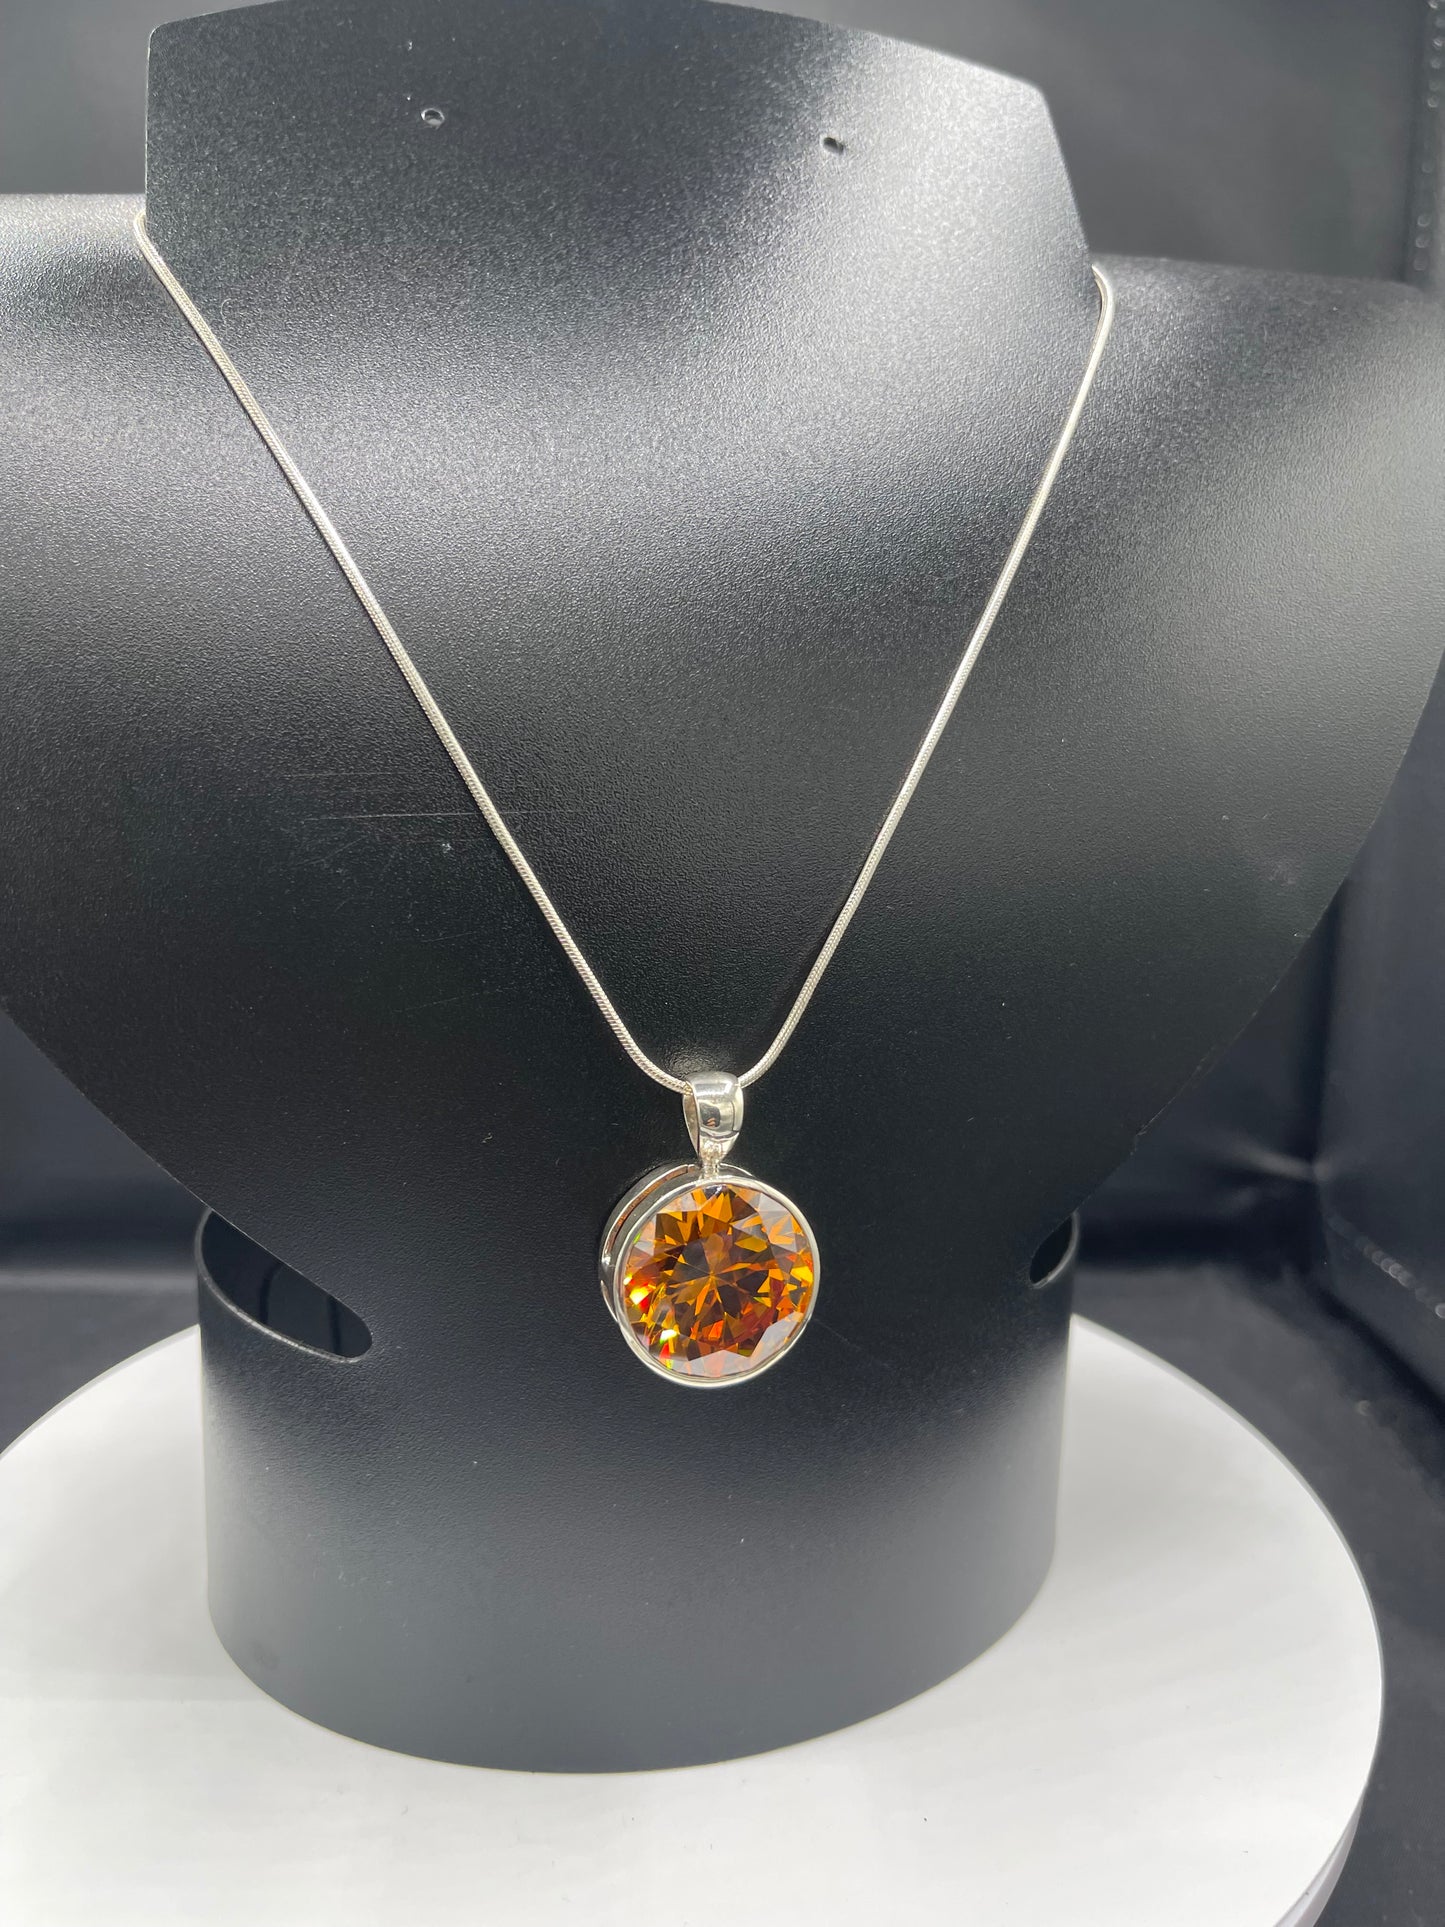 Stunning 50 Carat Orange Cubic Zirconia Pendant Sterling Silver Pendant & Necklace